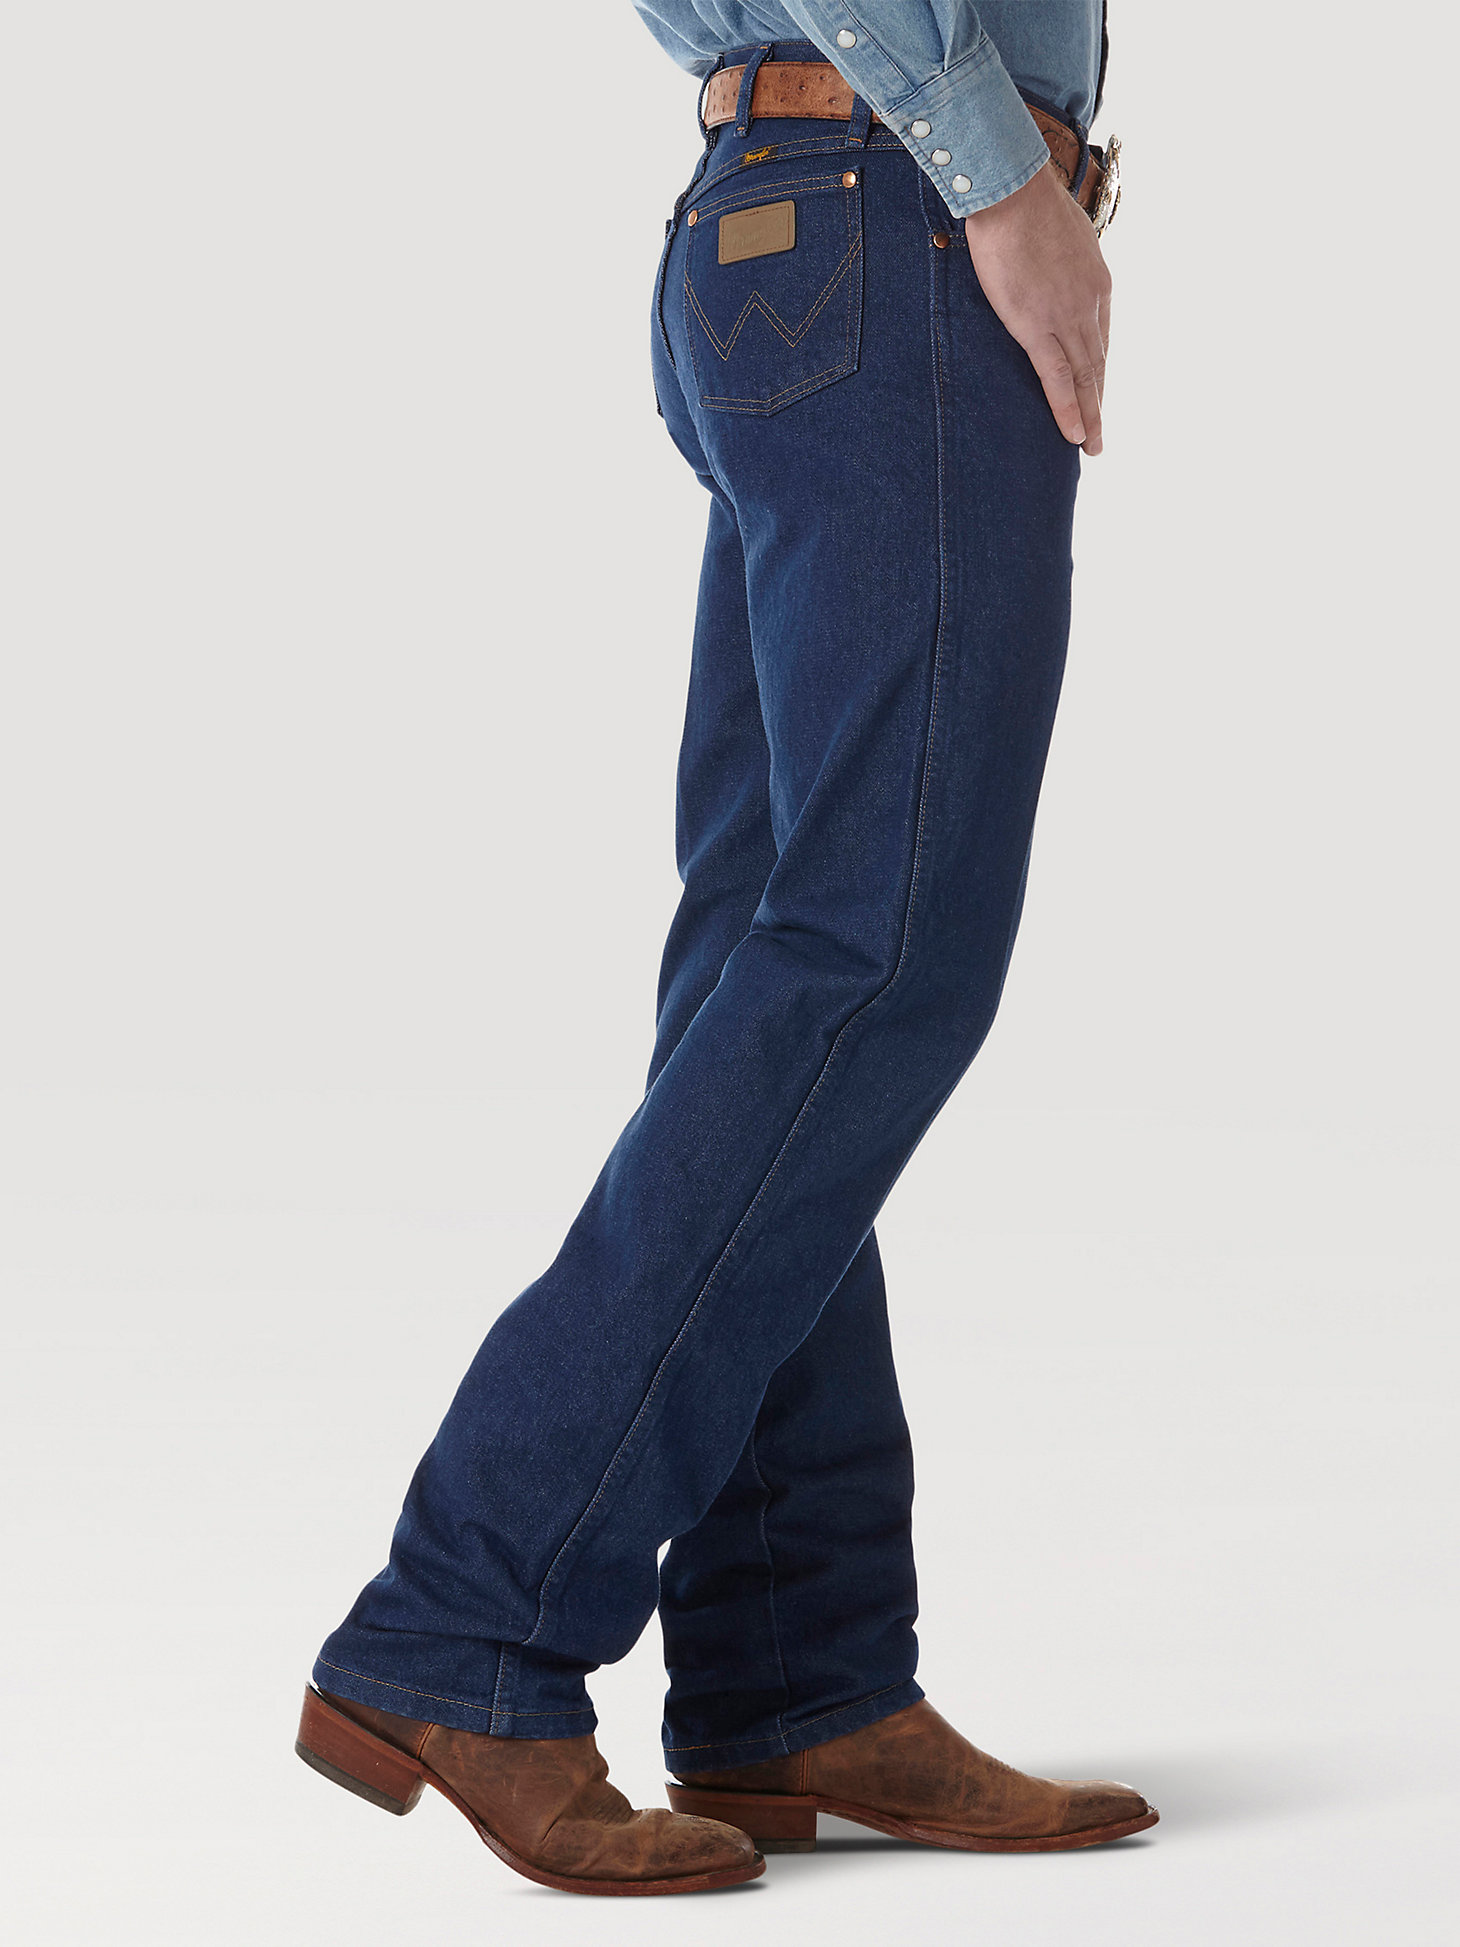 Wrangler® Cowboy Cut® Original Fit Jean in Prewashed Indigo alternative view 3